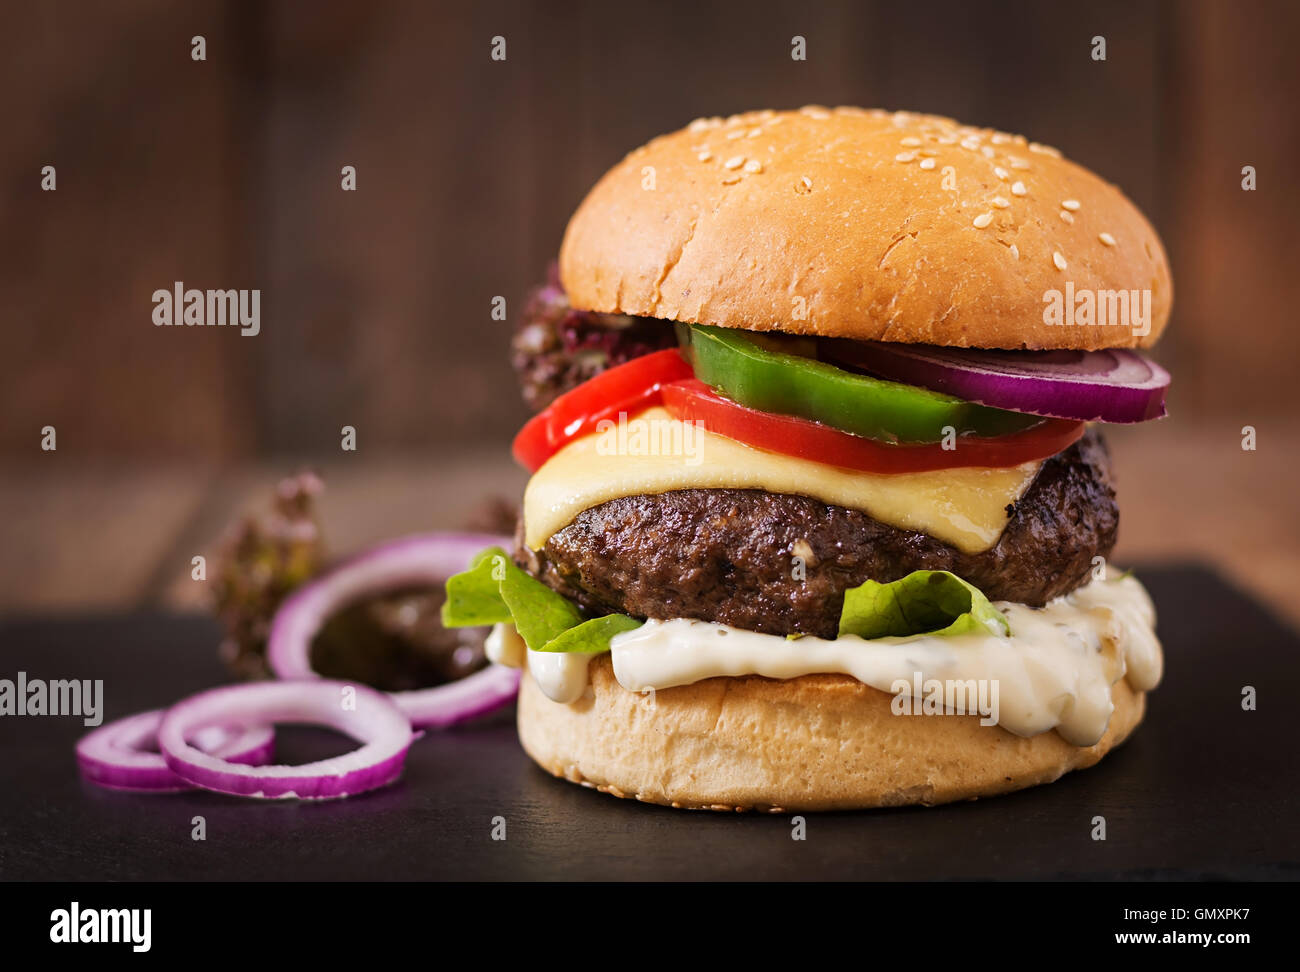 Big sandwich - hamburger burger with beef, cheese, tomato and tartar ...